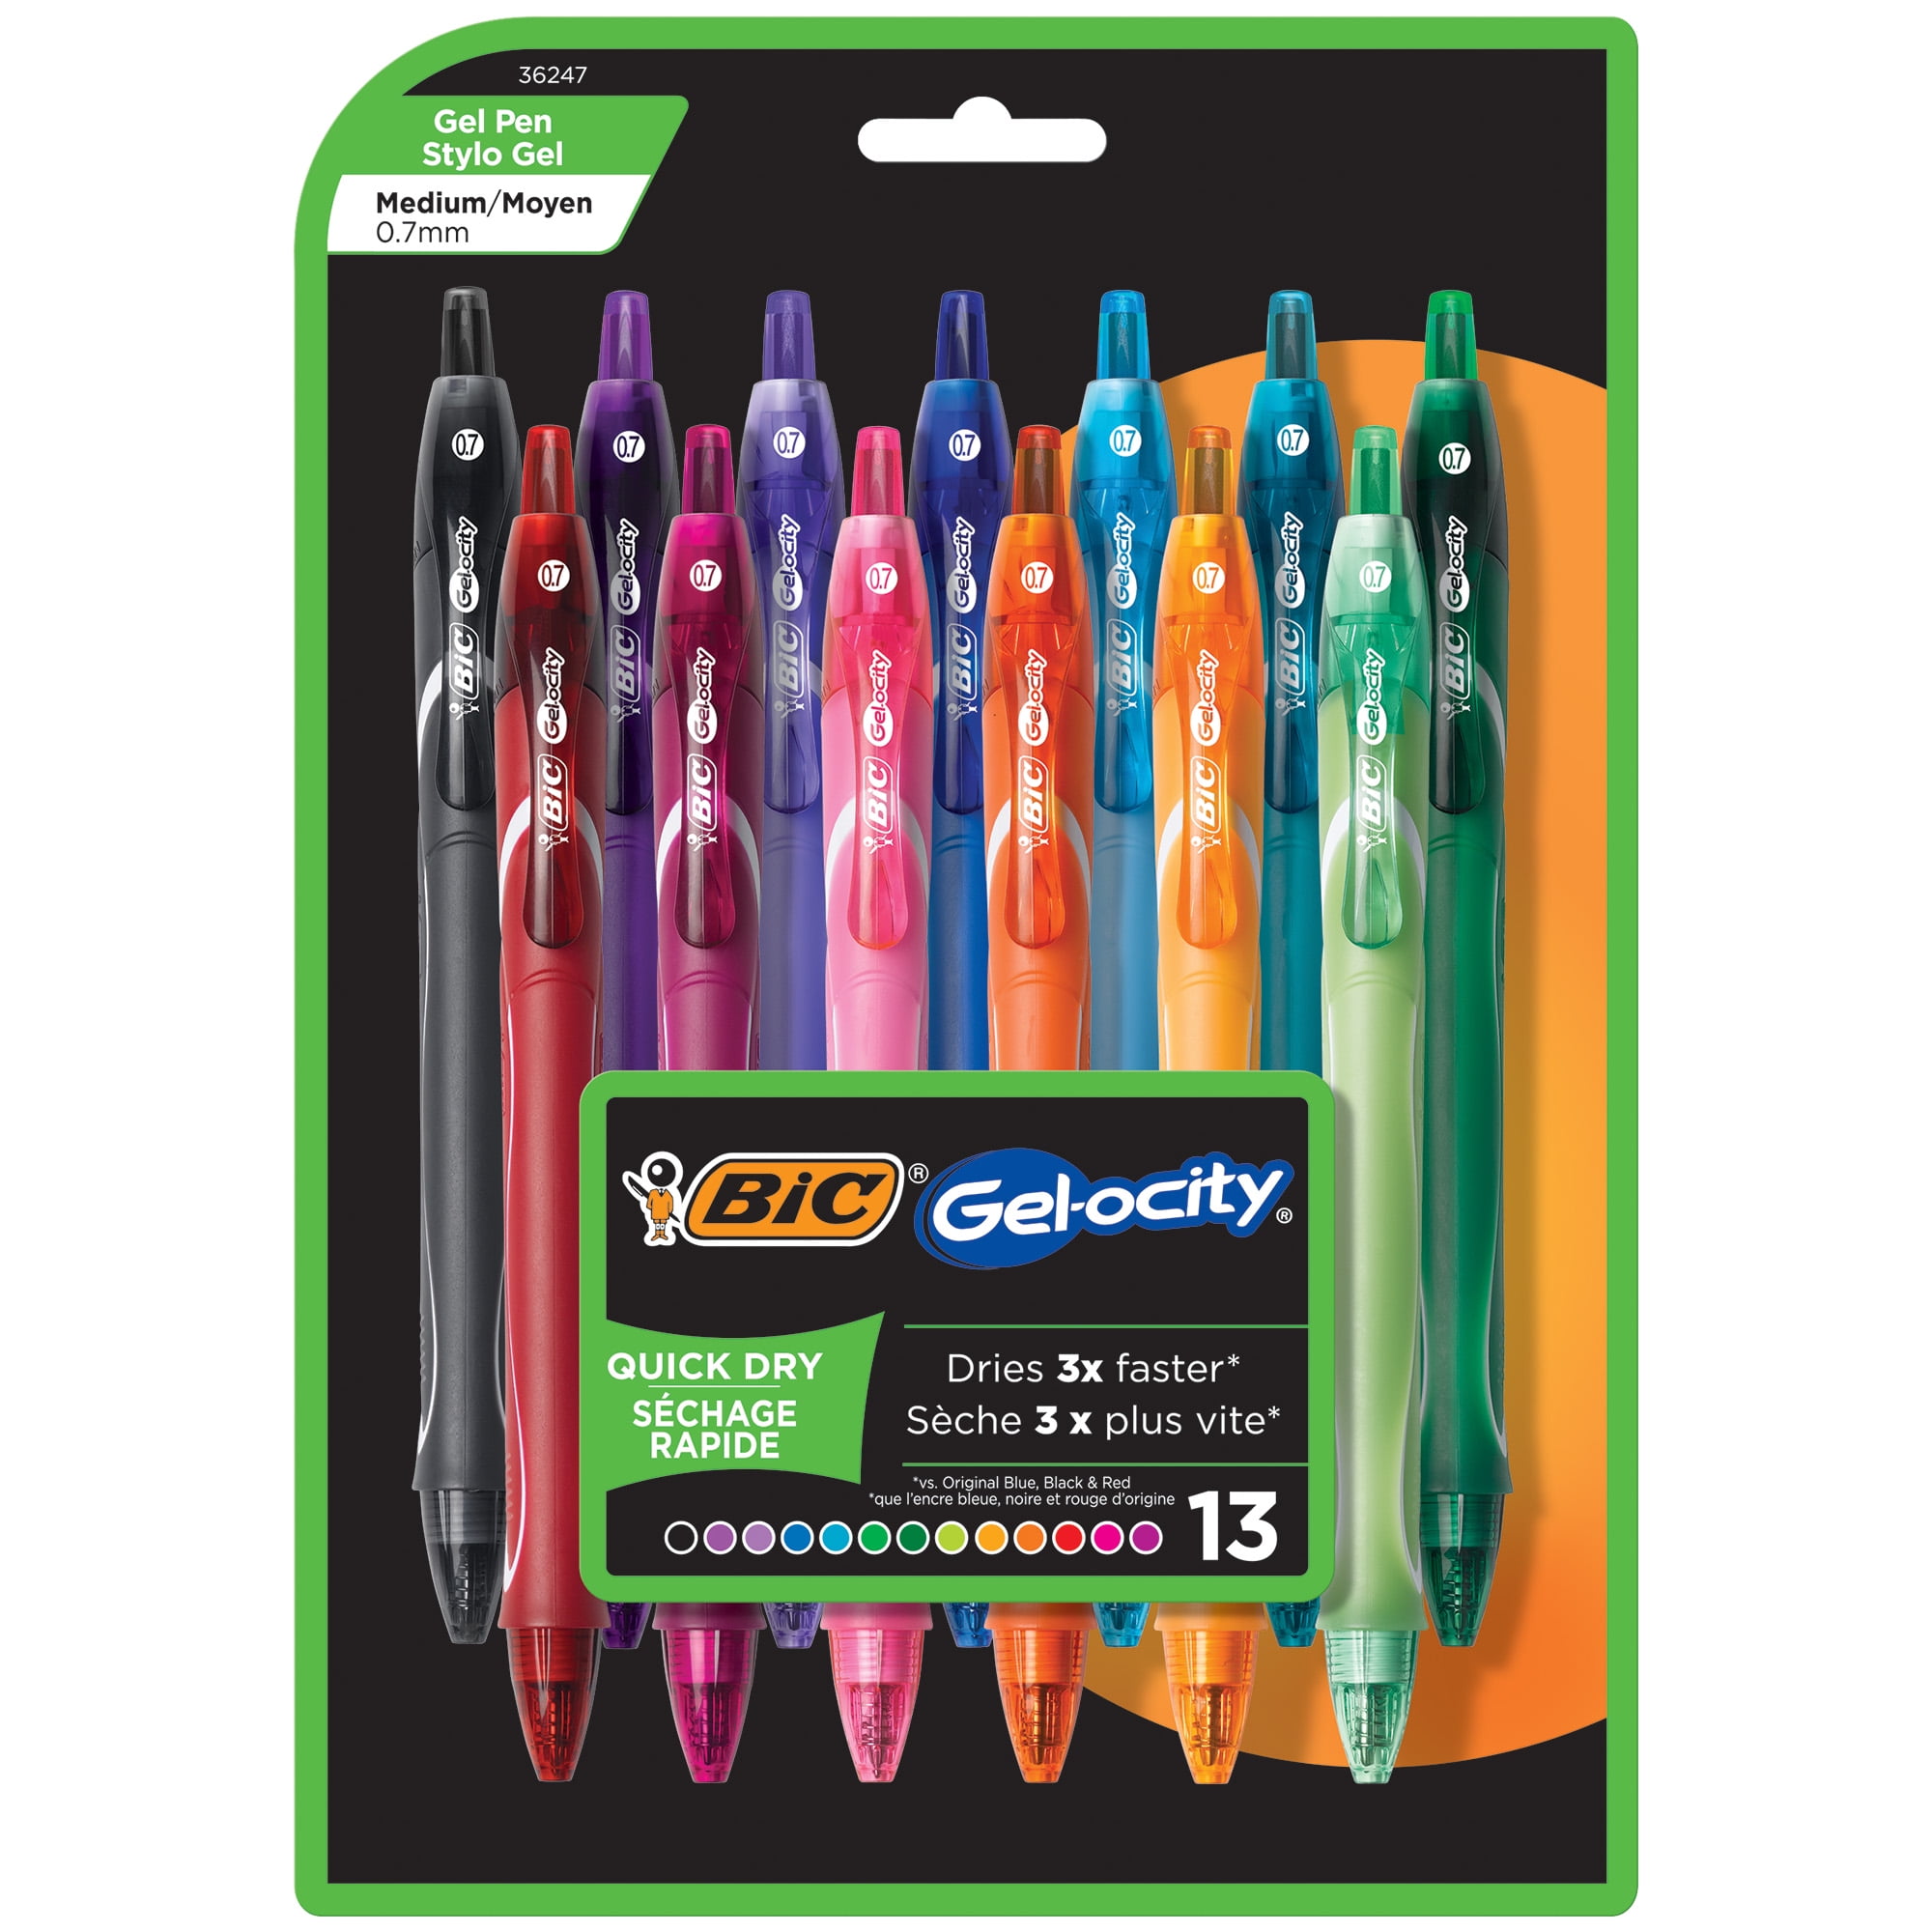 BIC Gel-ocity Quick Dry Gel Pen Fashion Colors 13 Count ...